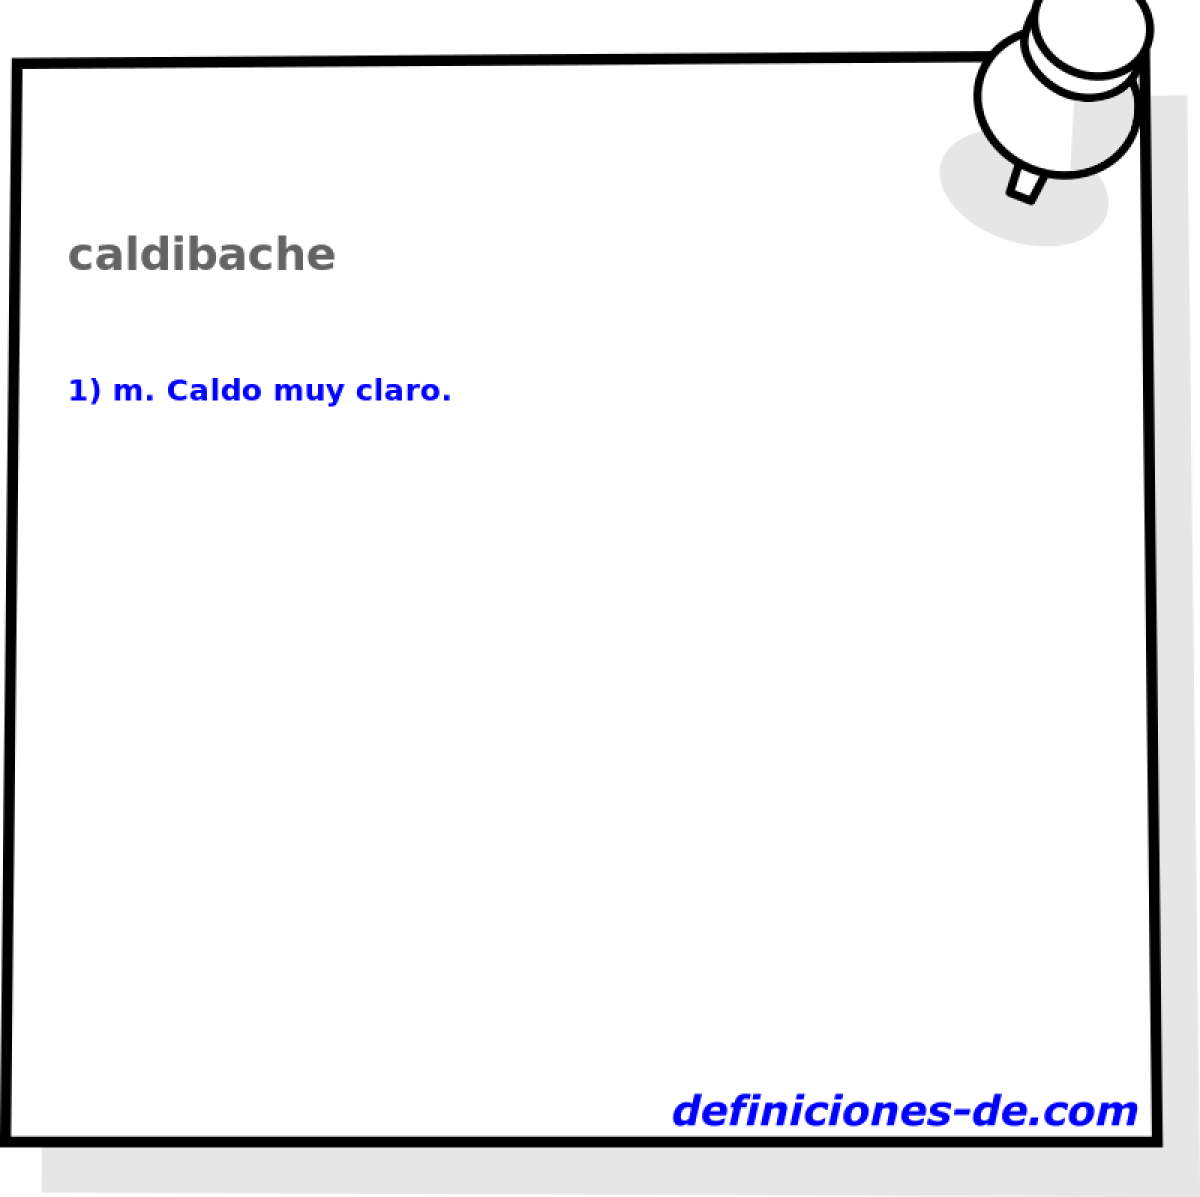 caldibache 